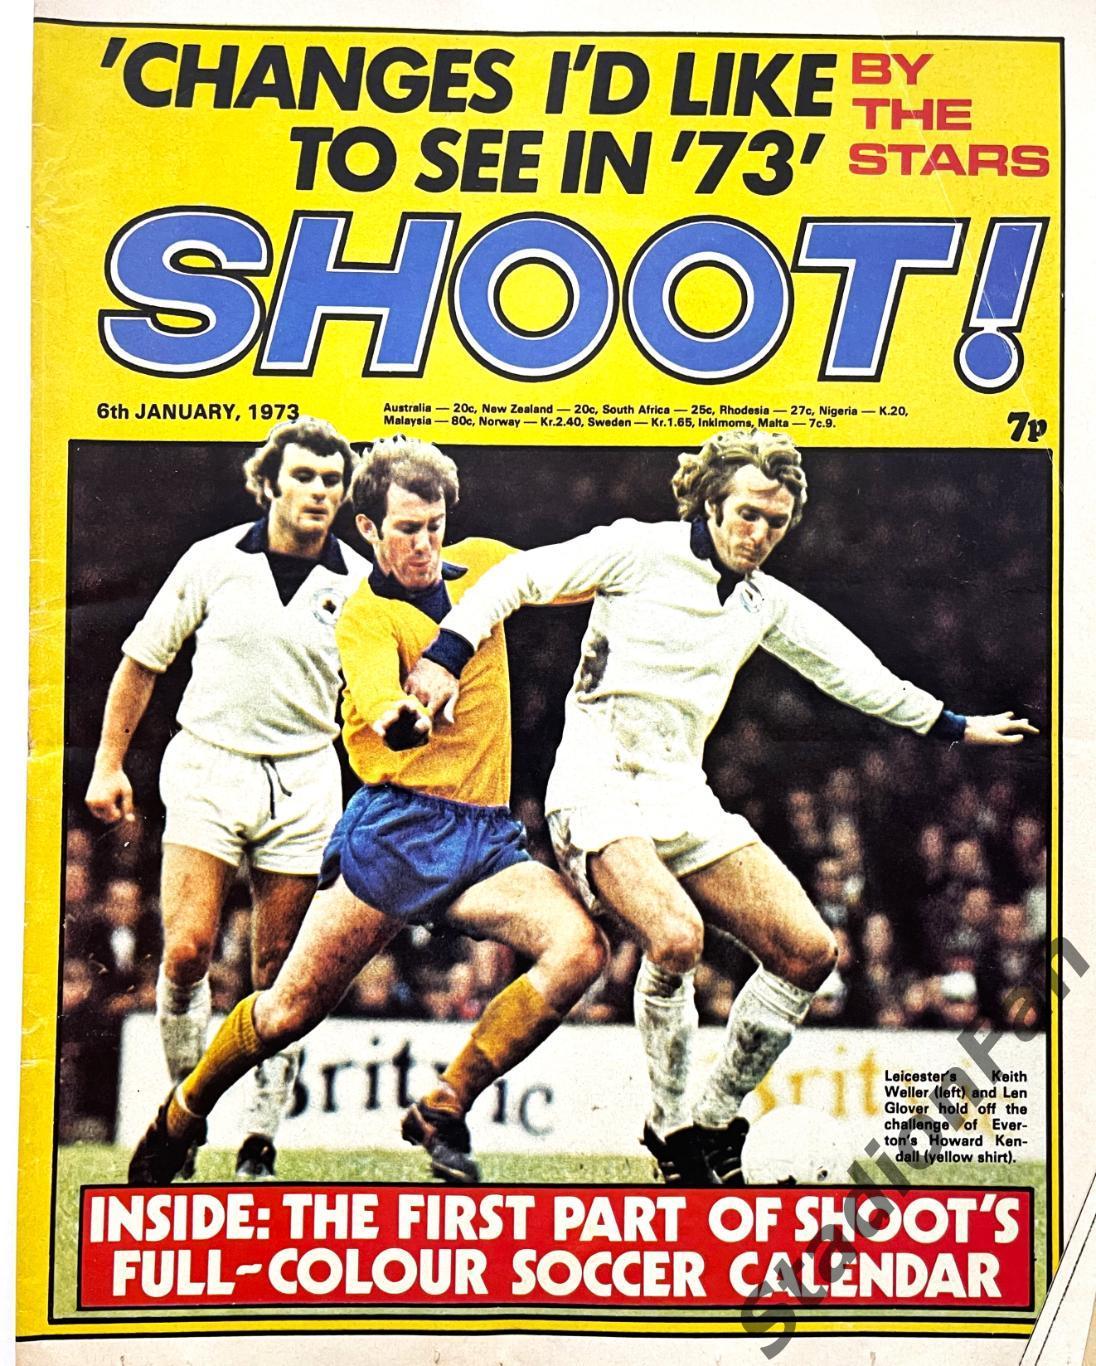 Журнал SHOOT! - 1973 год, от 6 января.